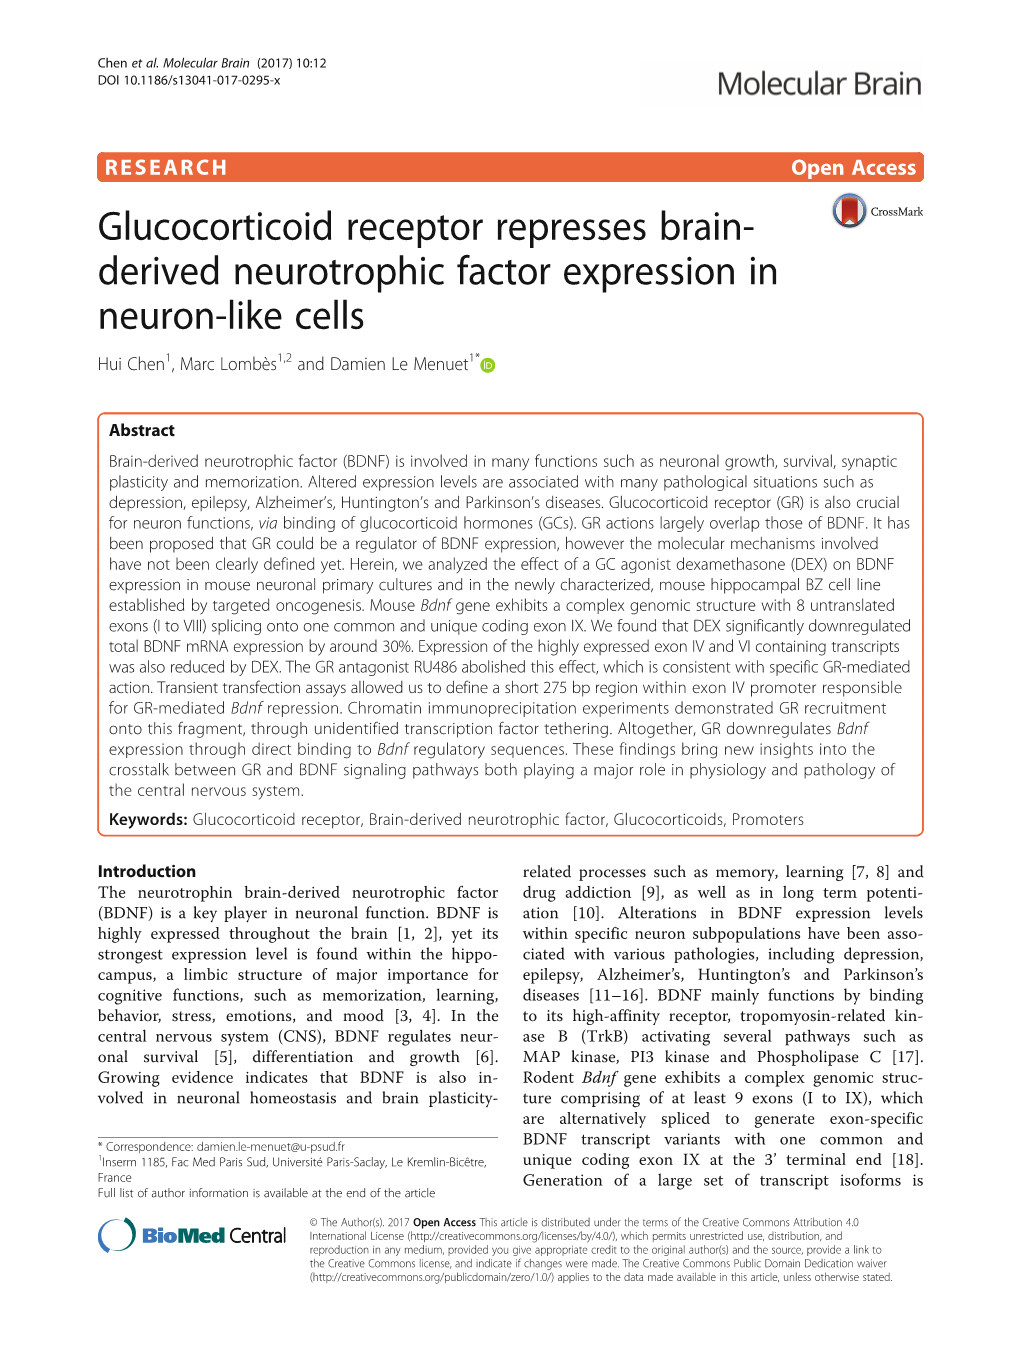 Glucocorticoid Receptor Represses Brain-Derived Neurotrophic Factor